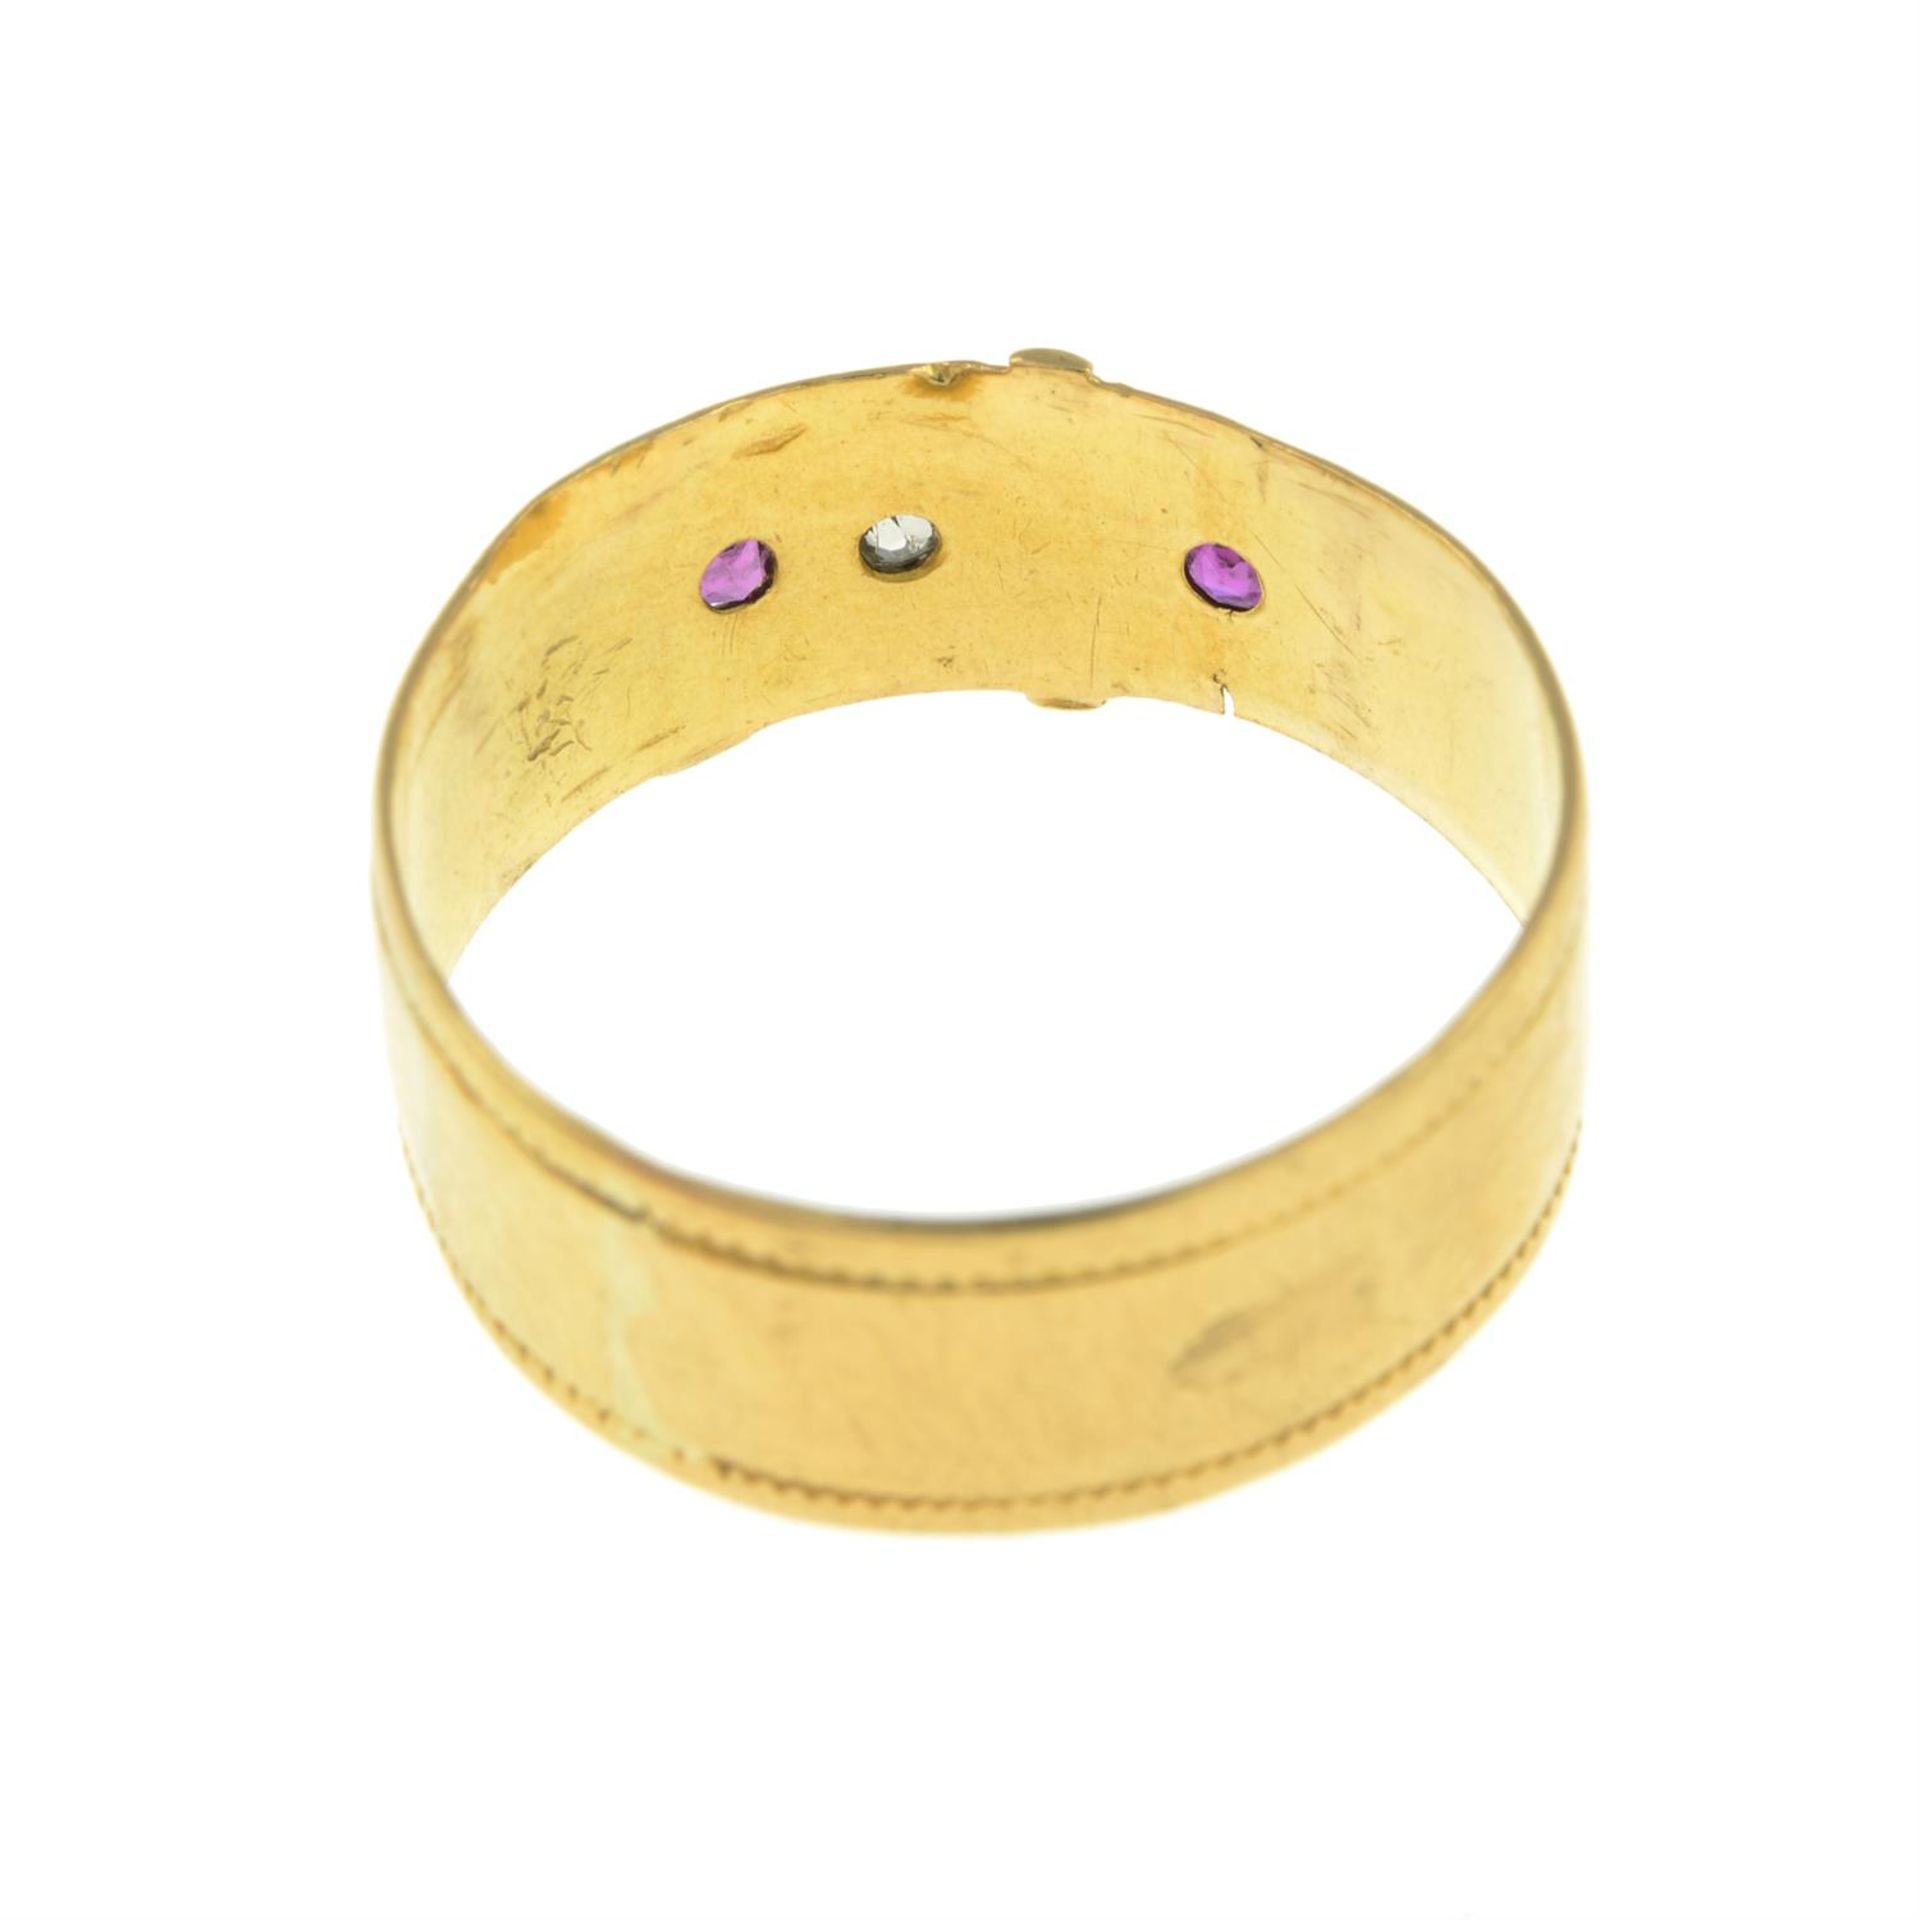 Edwardian 18ct gold gem ring - Image 2 of 2